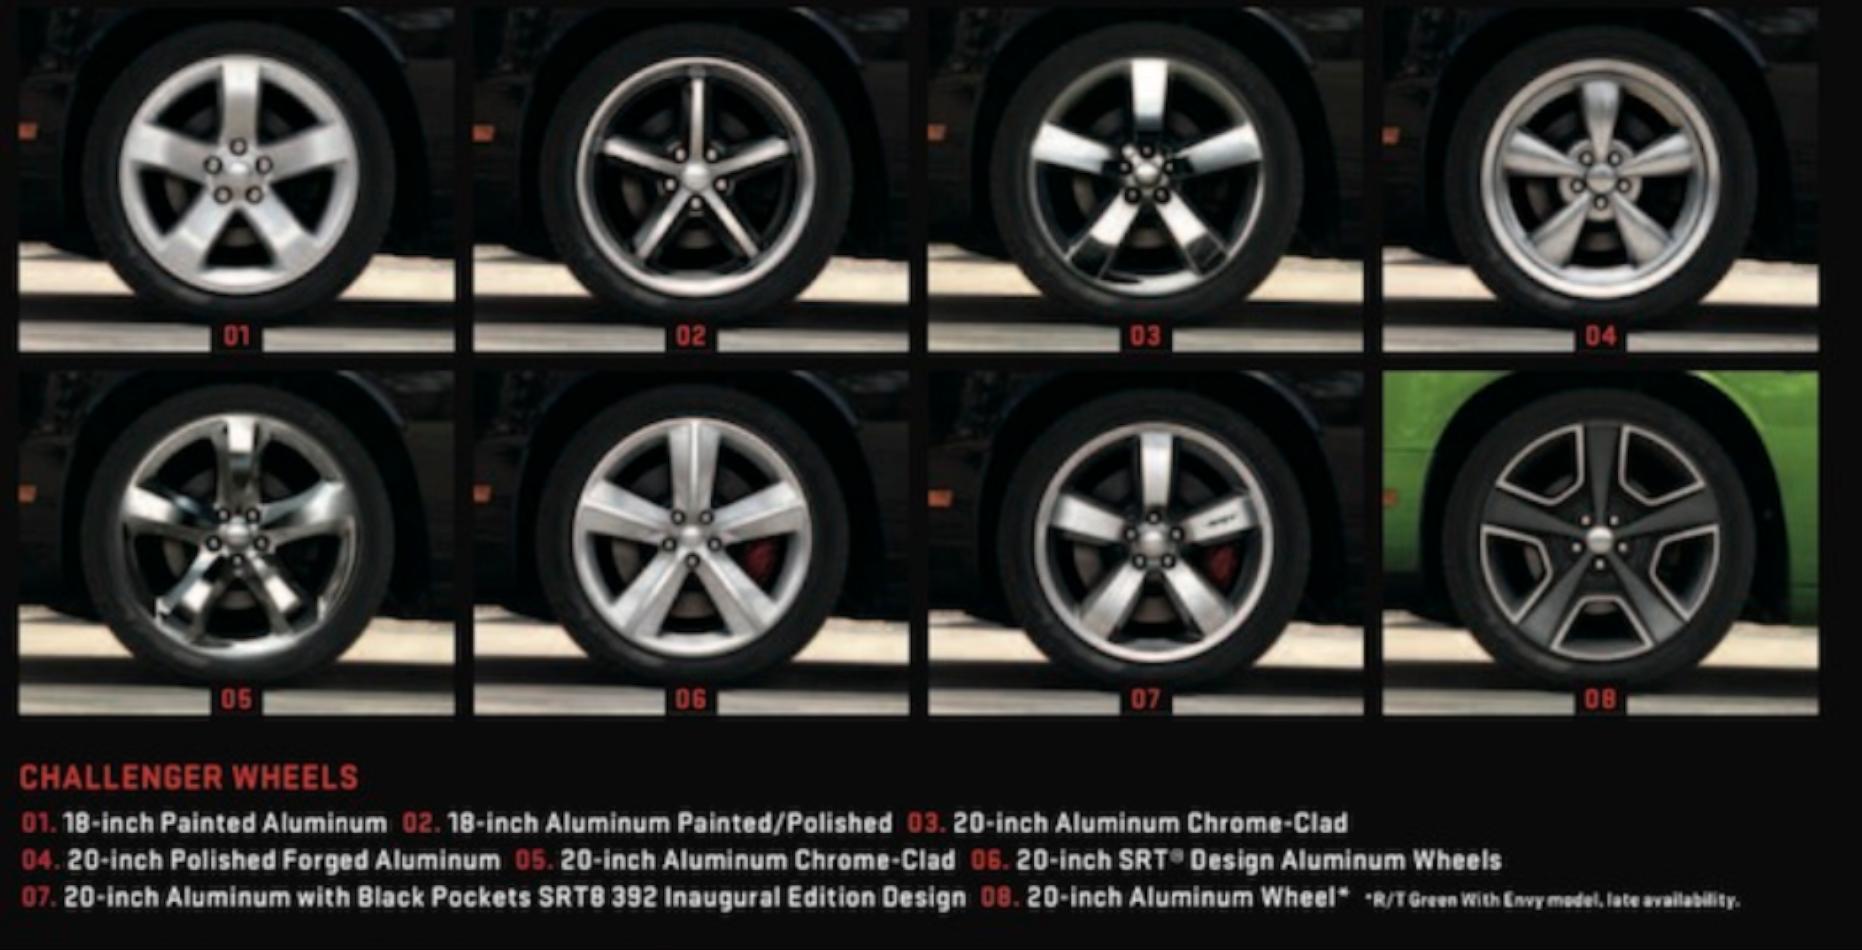 2011 Challenger rim choices